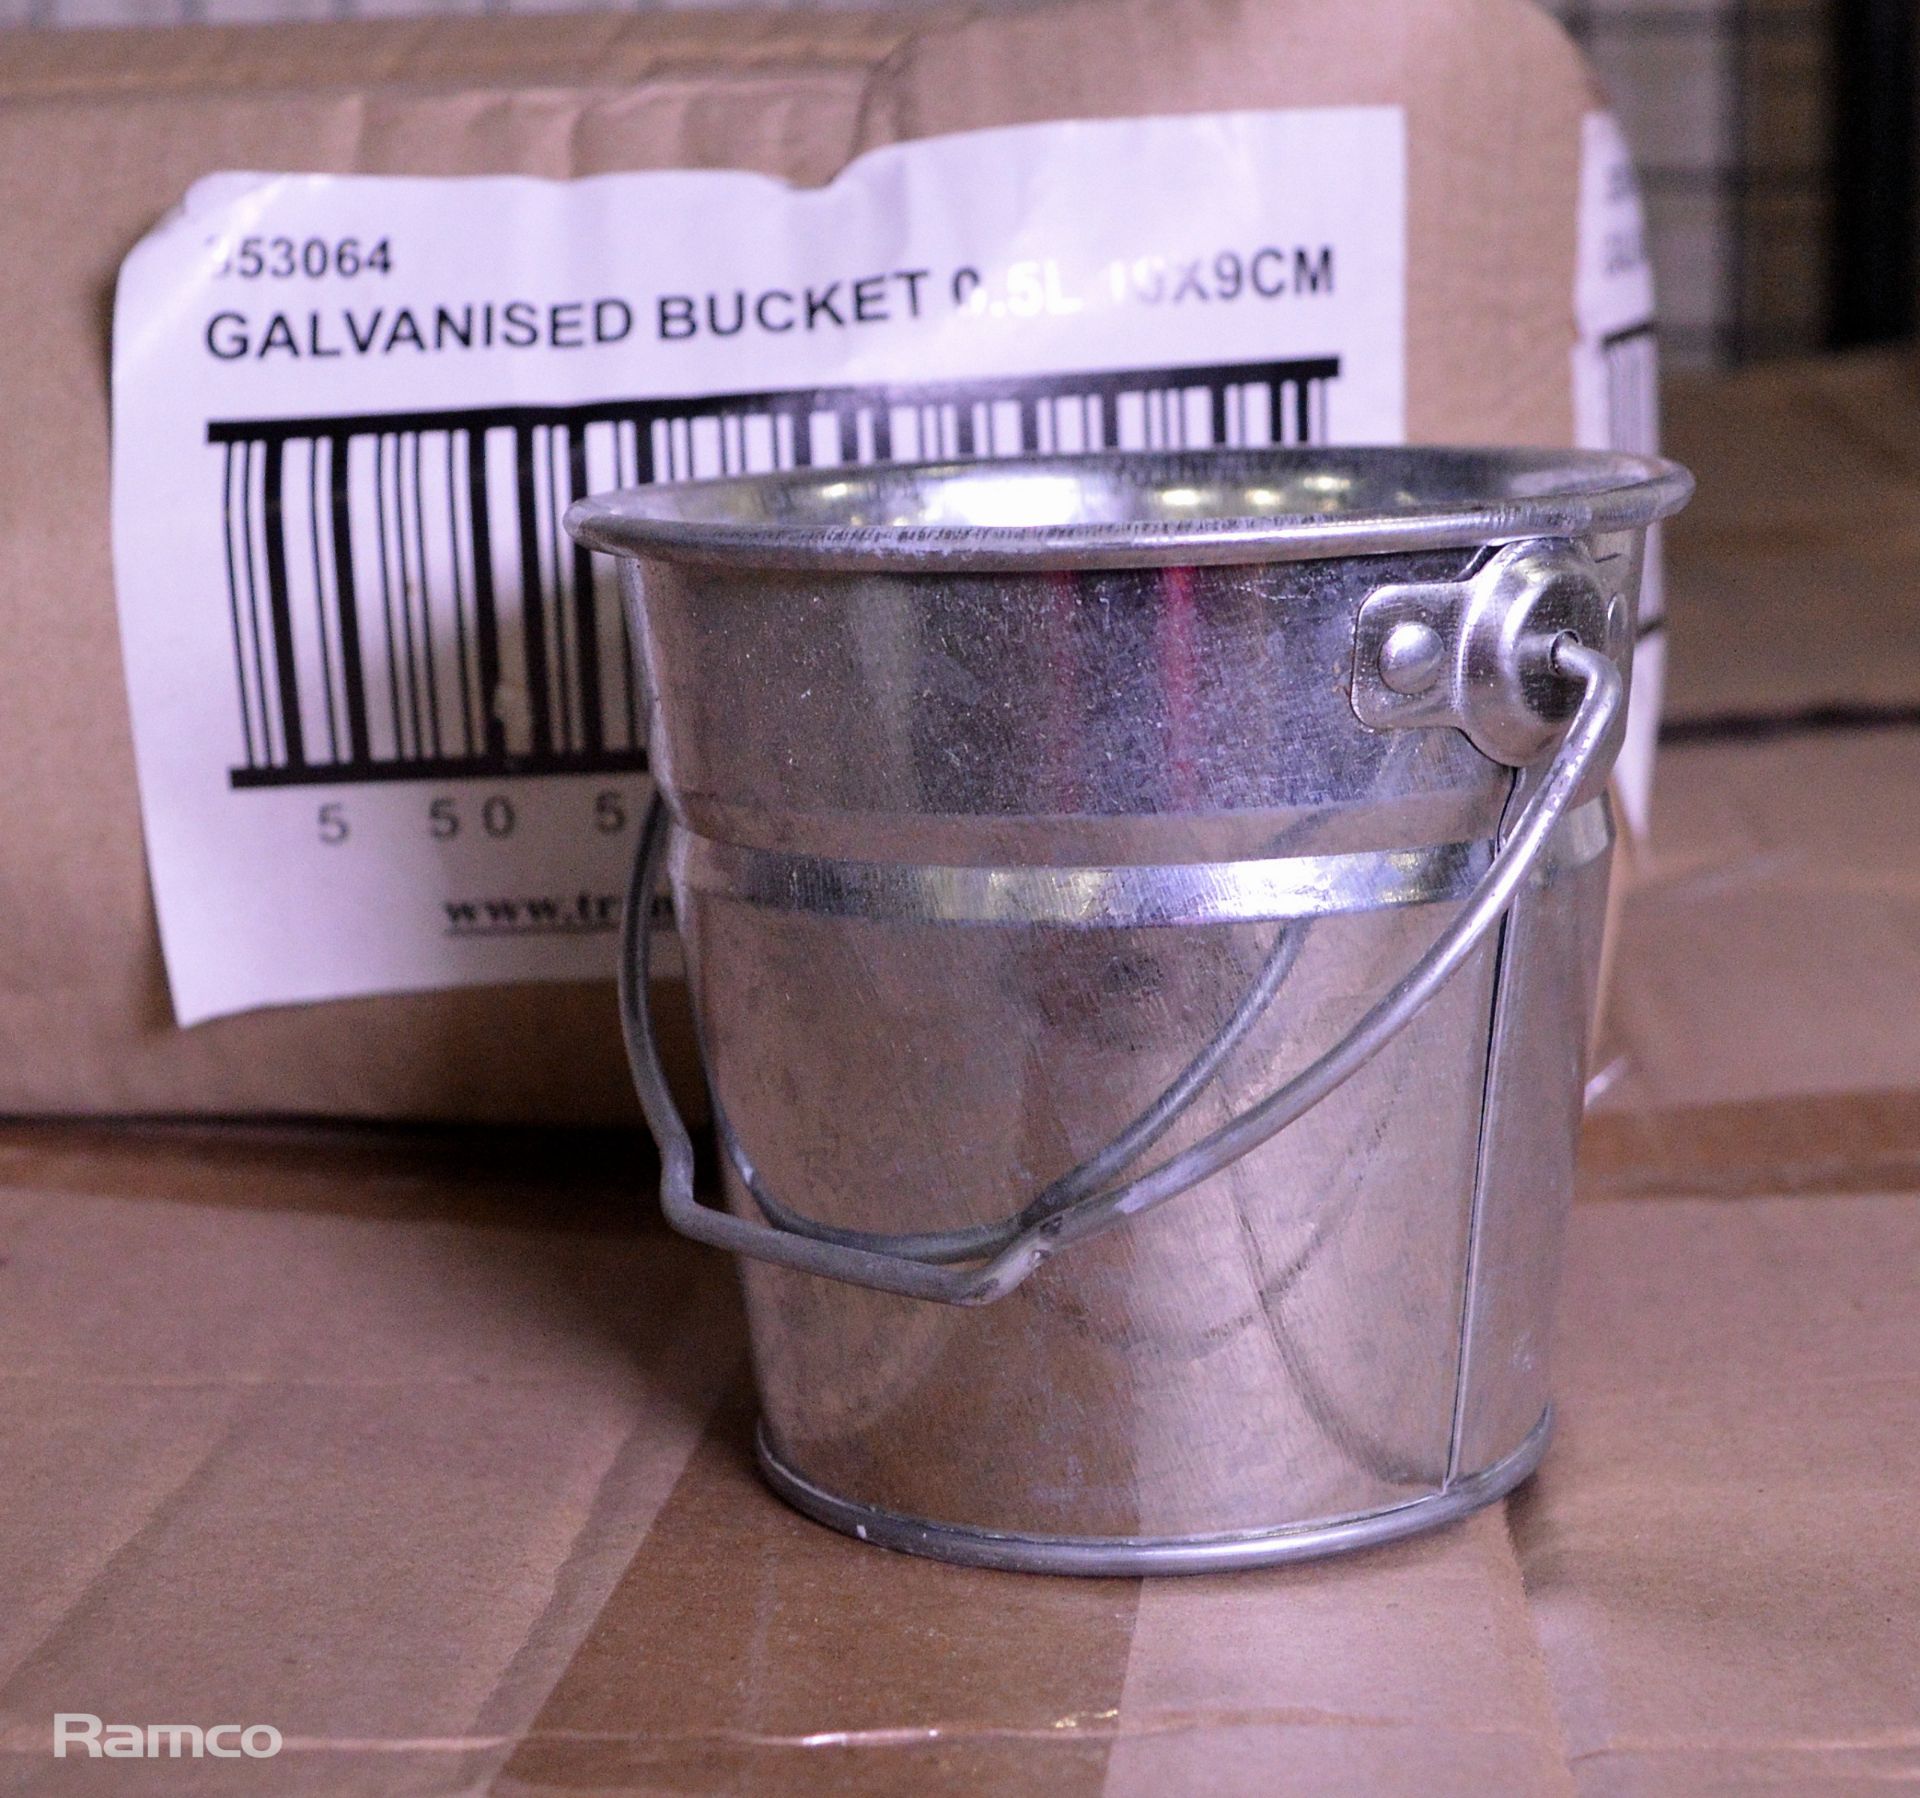 700x Transworld Metal Galvanised Buckets 0.5L - Image 2 of 2